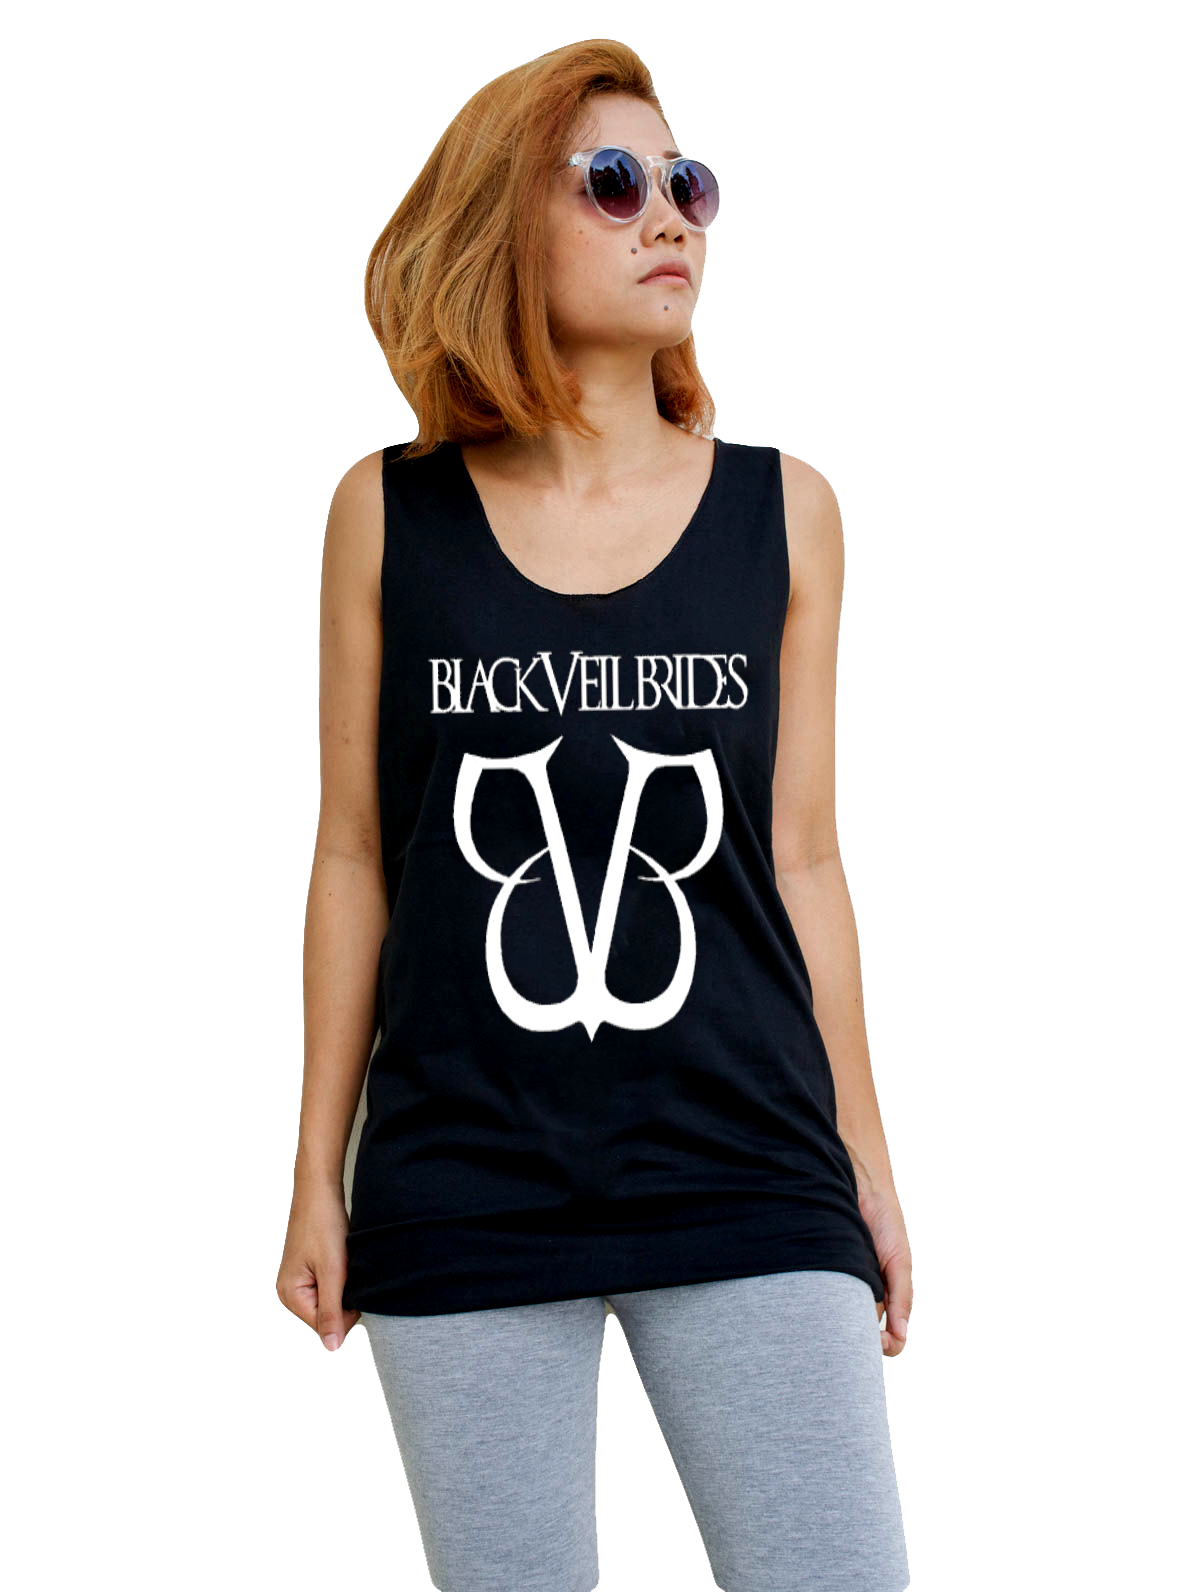 Unisex Black Veil Brides Tank-Top Singlet vest Sleeveless T-shirt